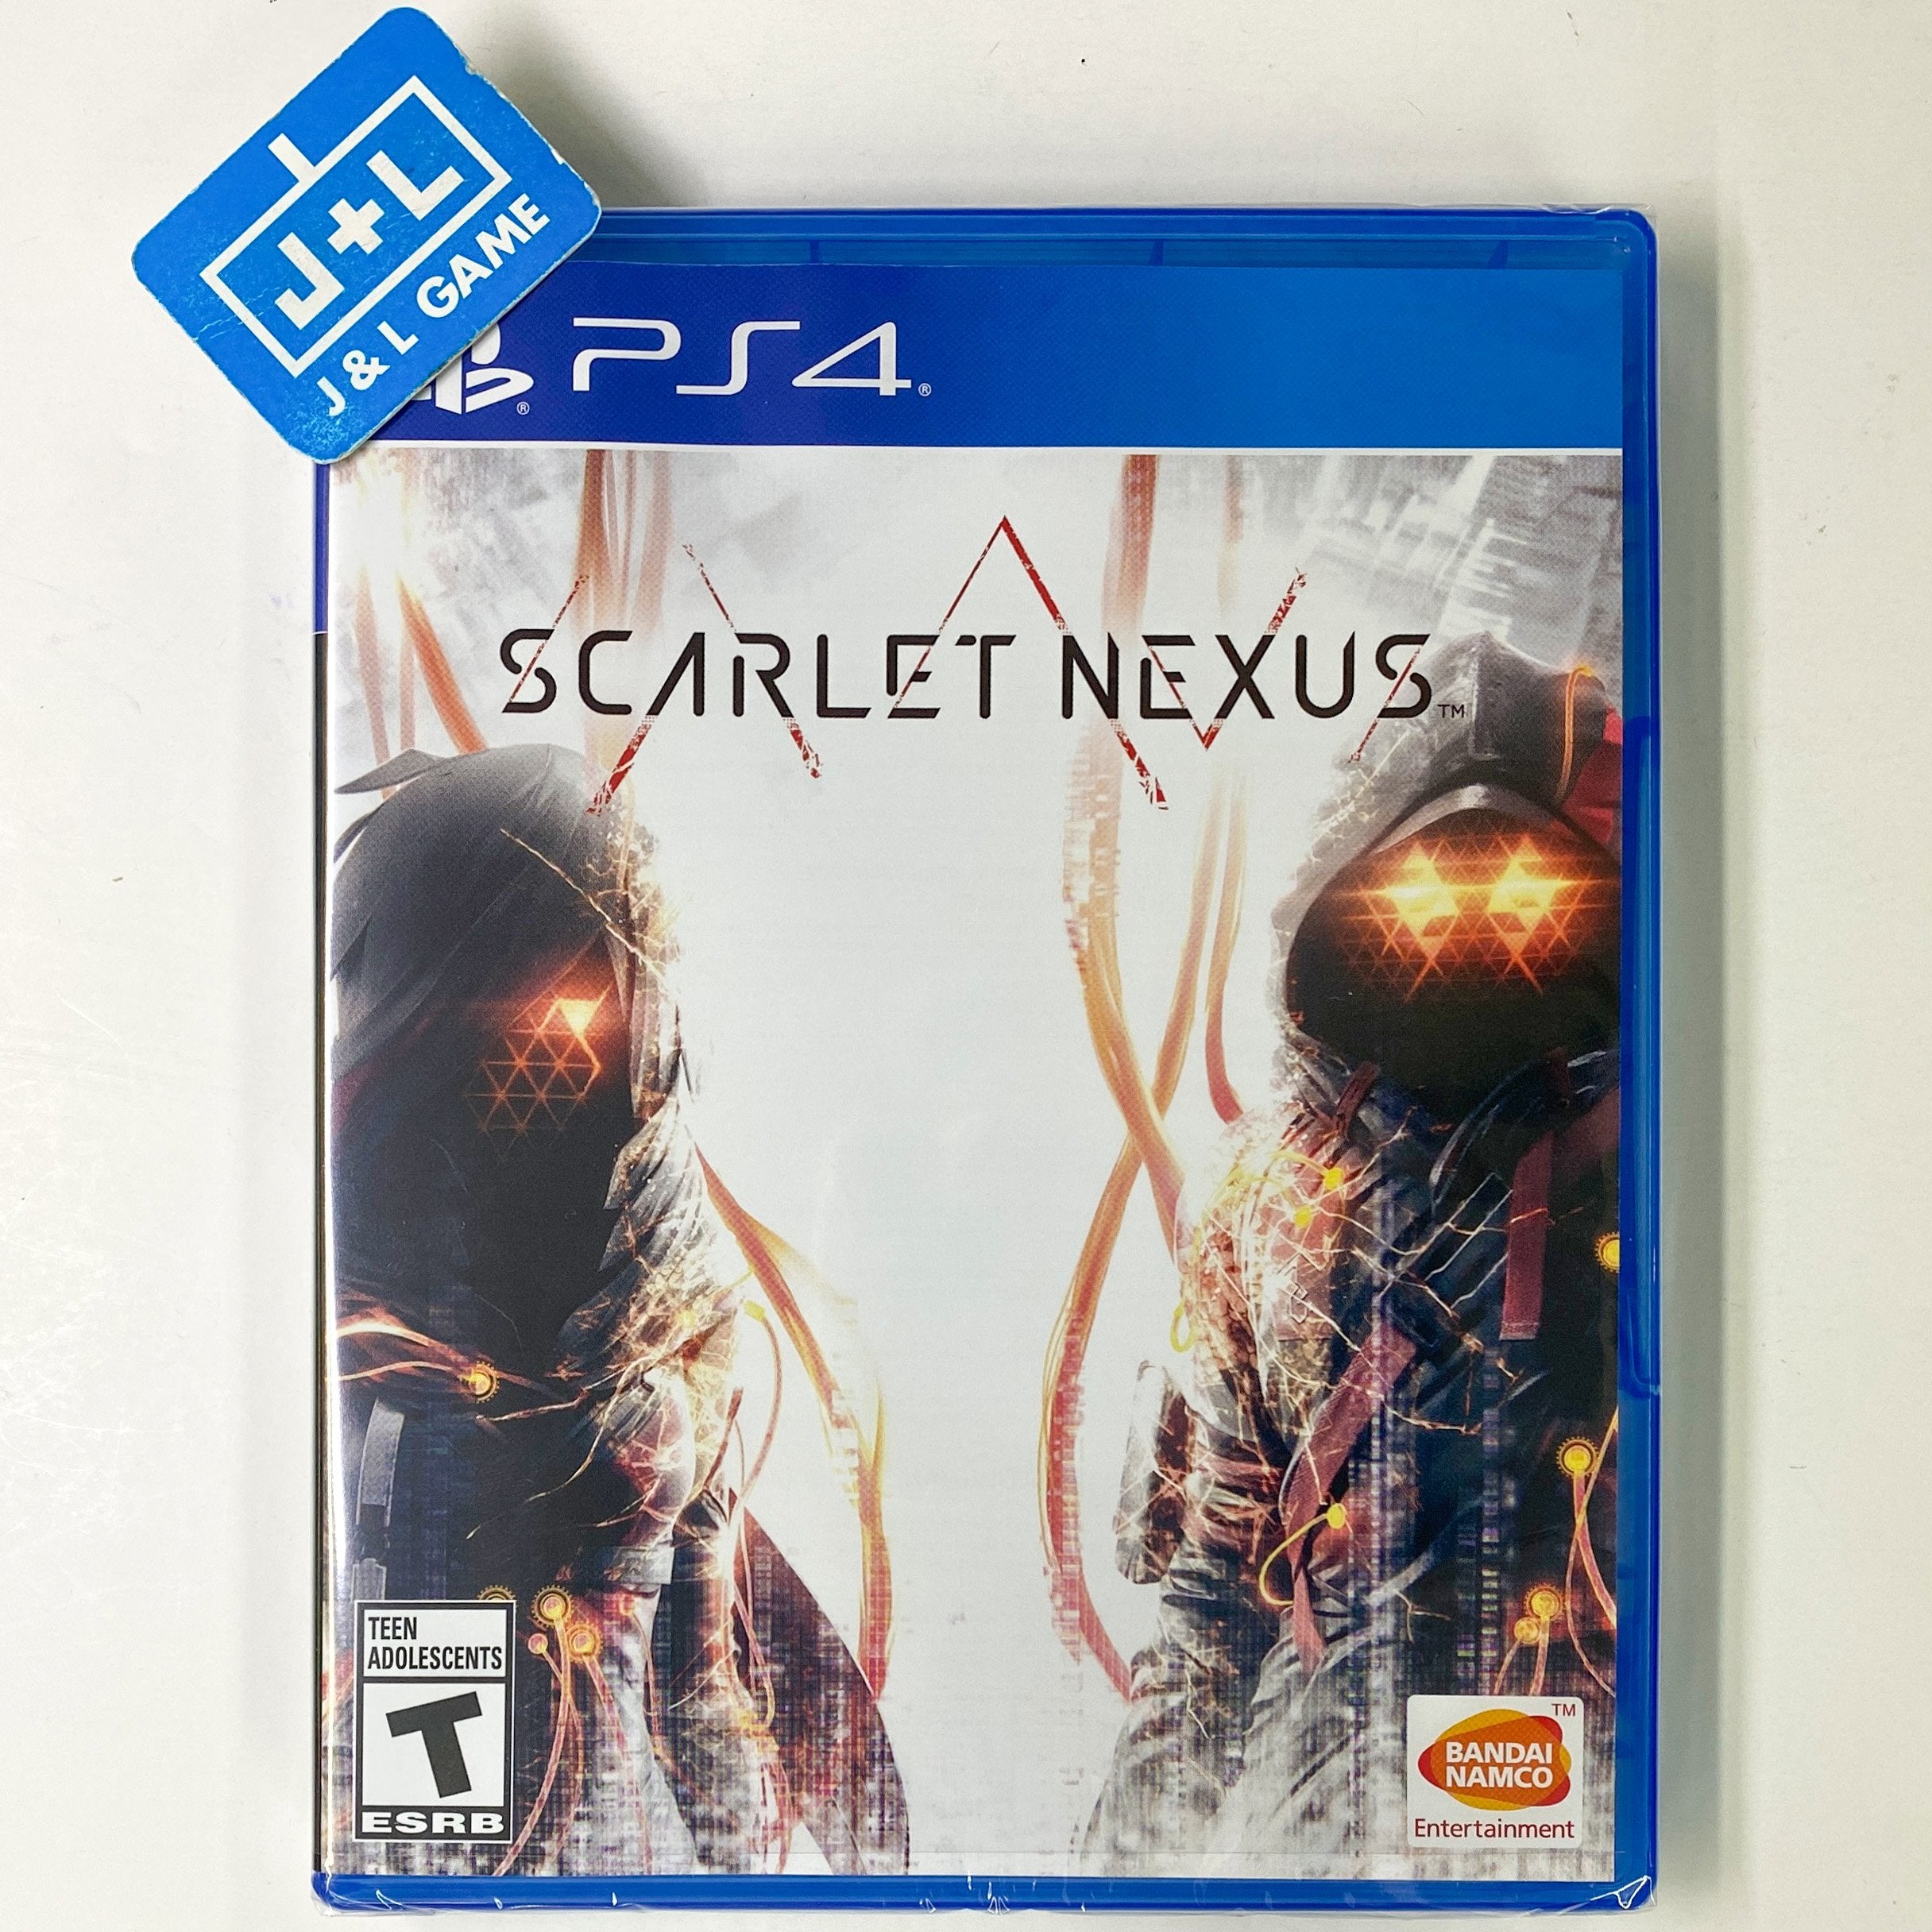 SCARLET NEXUS - (PS4) PlayStation 4 [Pre-Owned] Video Games BANDAI NAMCO Entertainment   